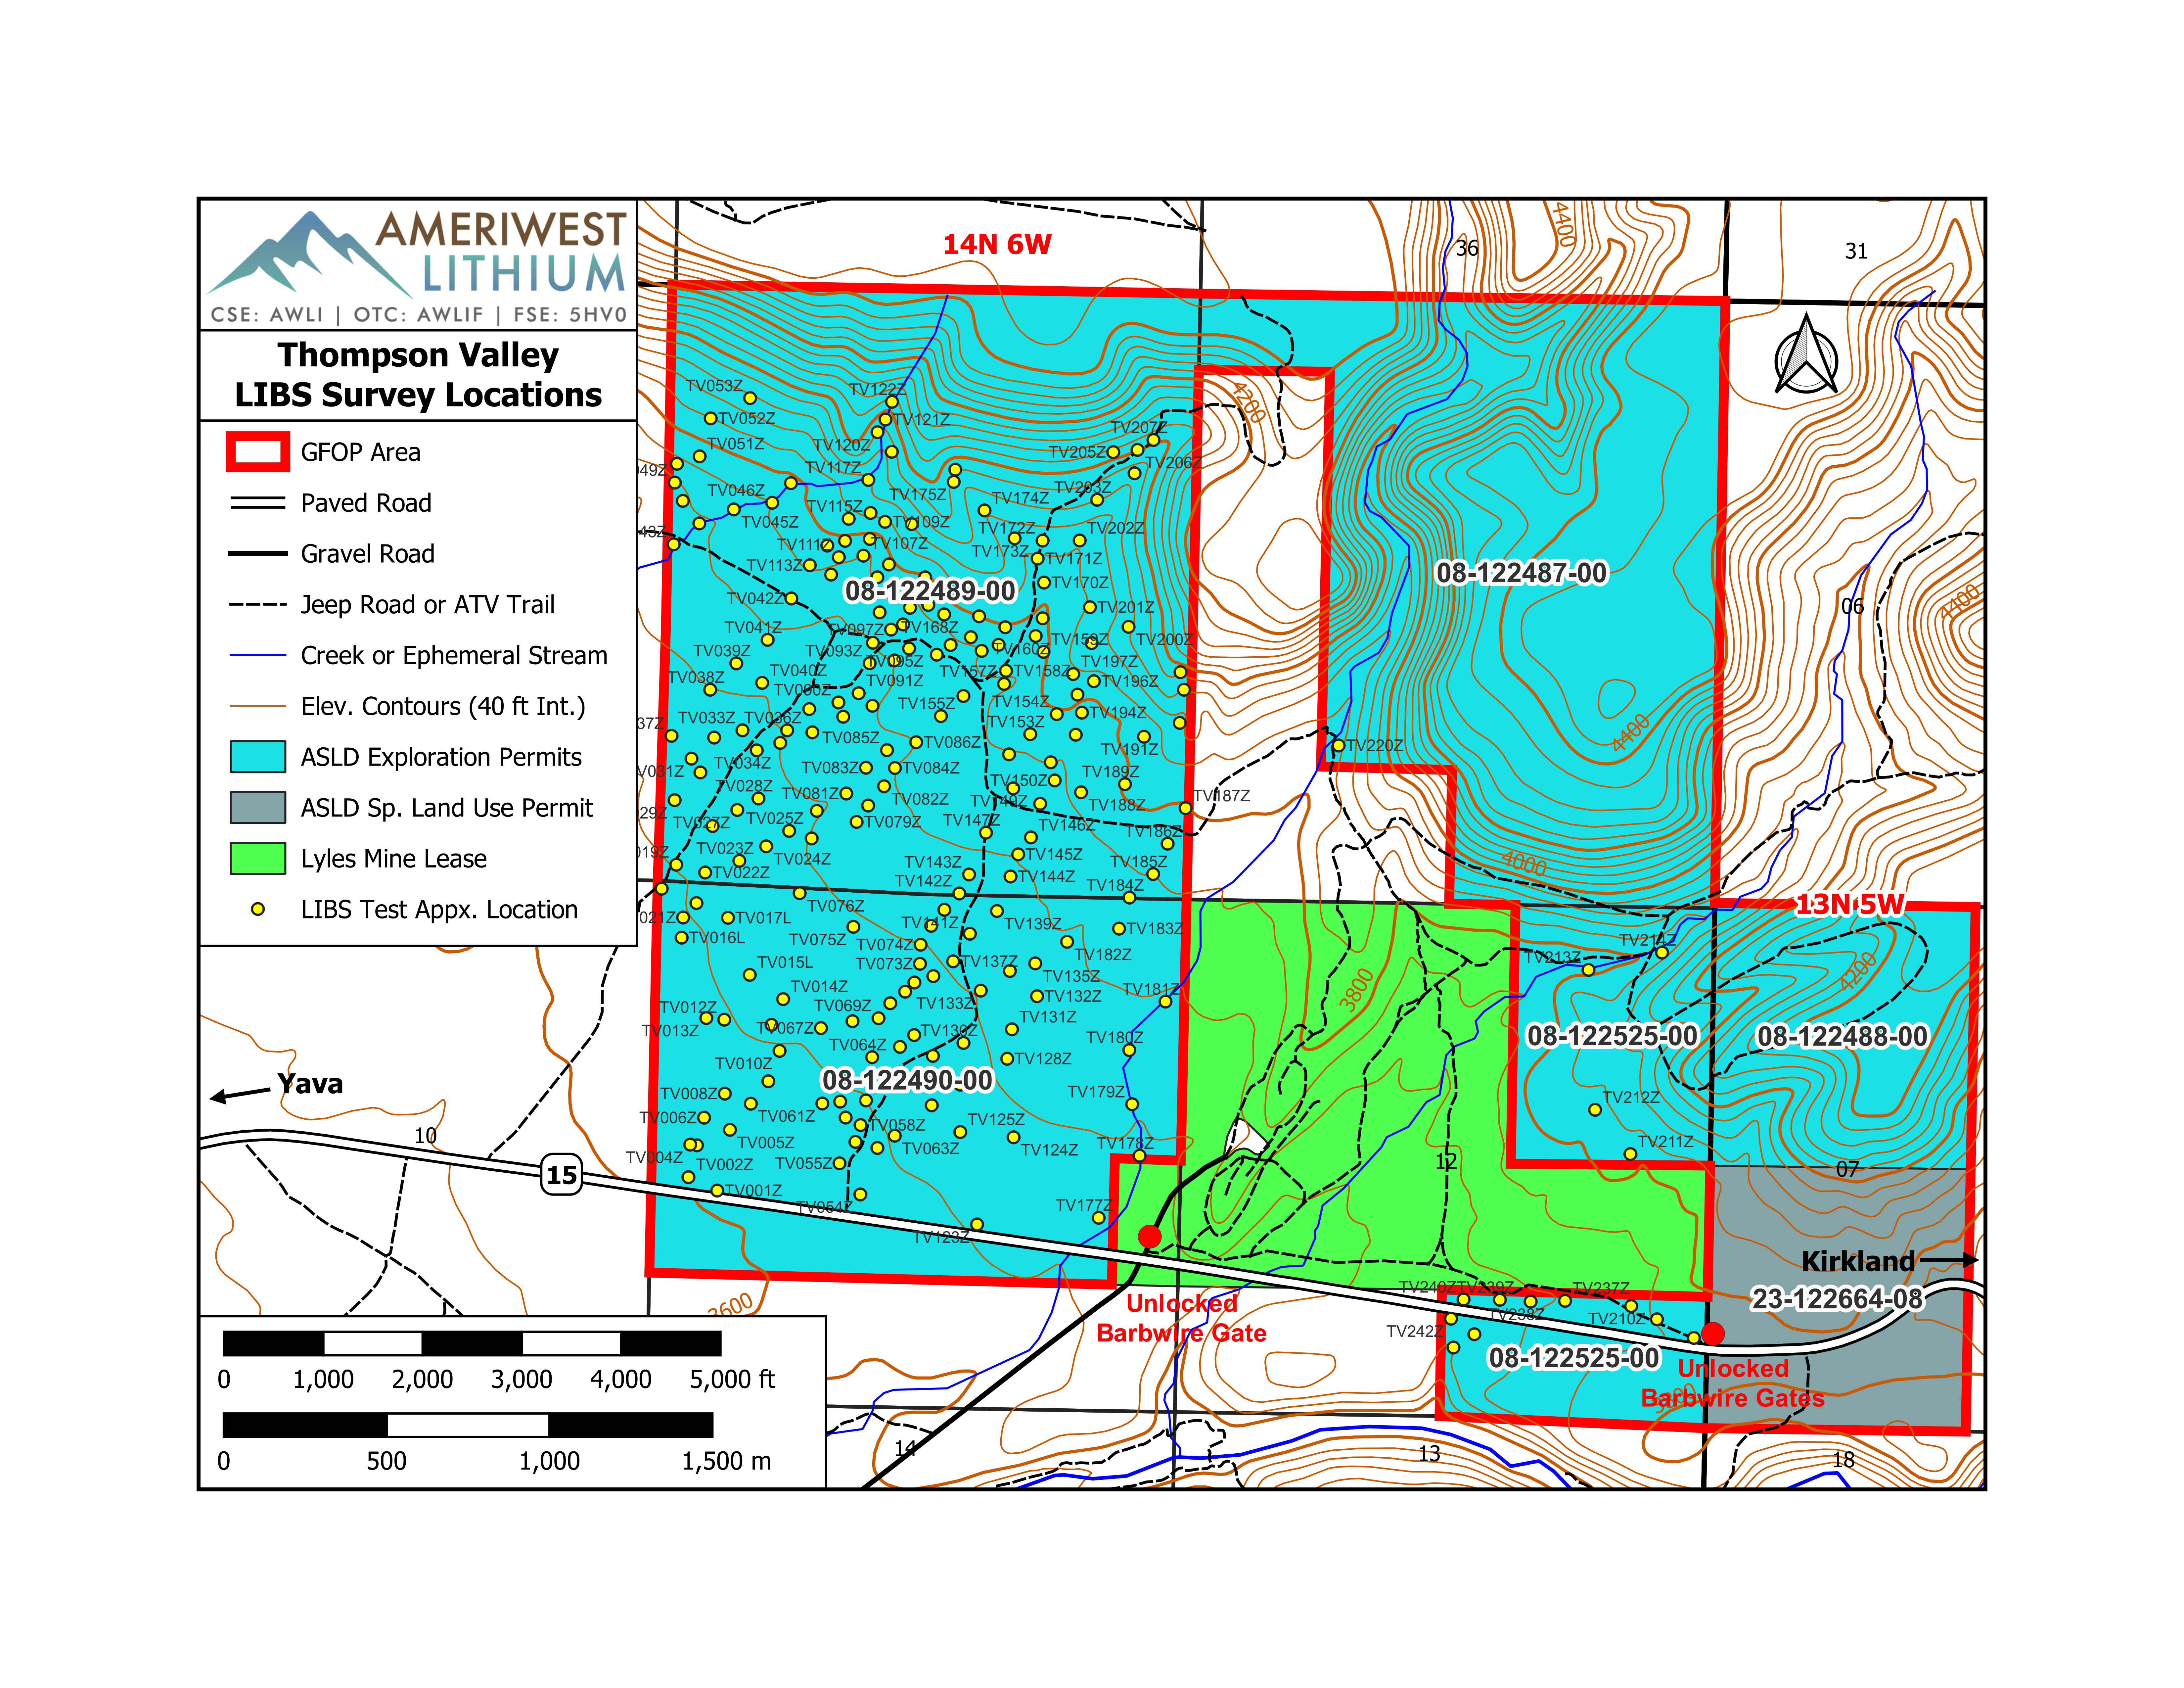 Figure 1 Ameriwest Lithium Thompson Valley Claim Area)